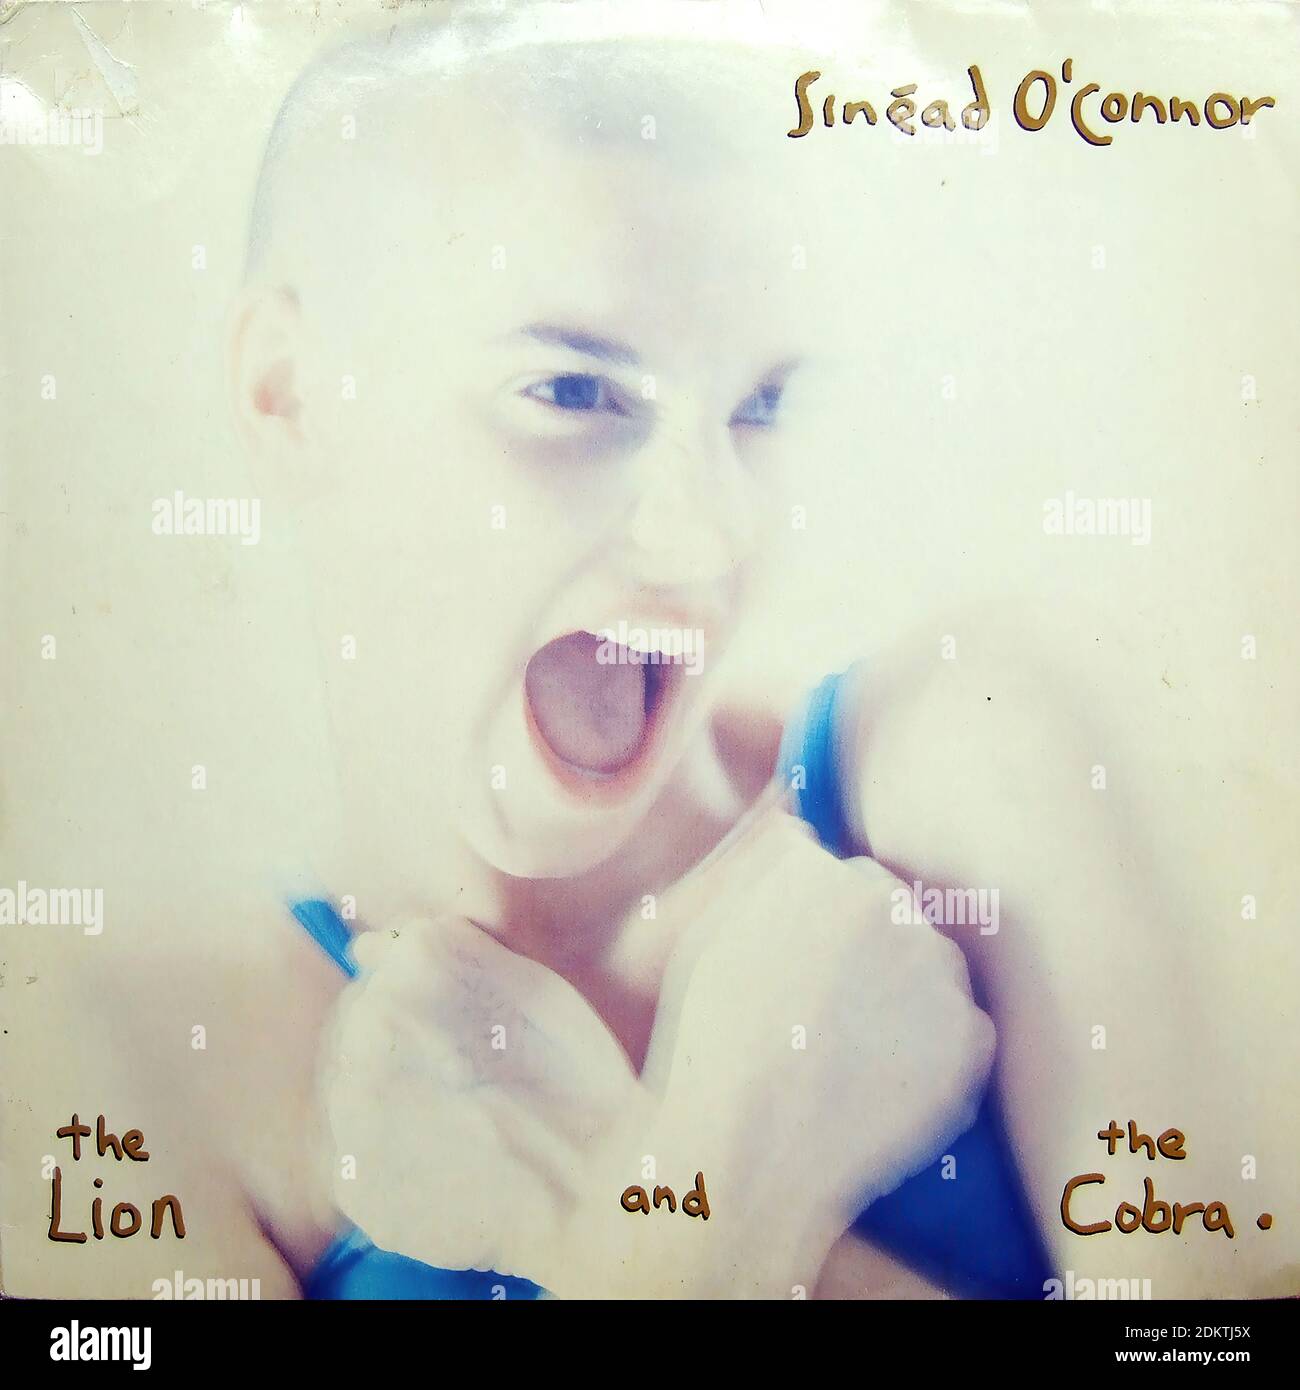 Sinead O'Connor - The Lion & The Cobra, BMG Ariola 208 563, 1987 - Vintage Vinyl Album Cover Stockfoto